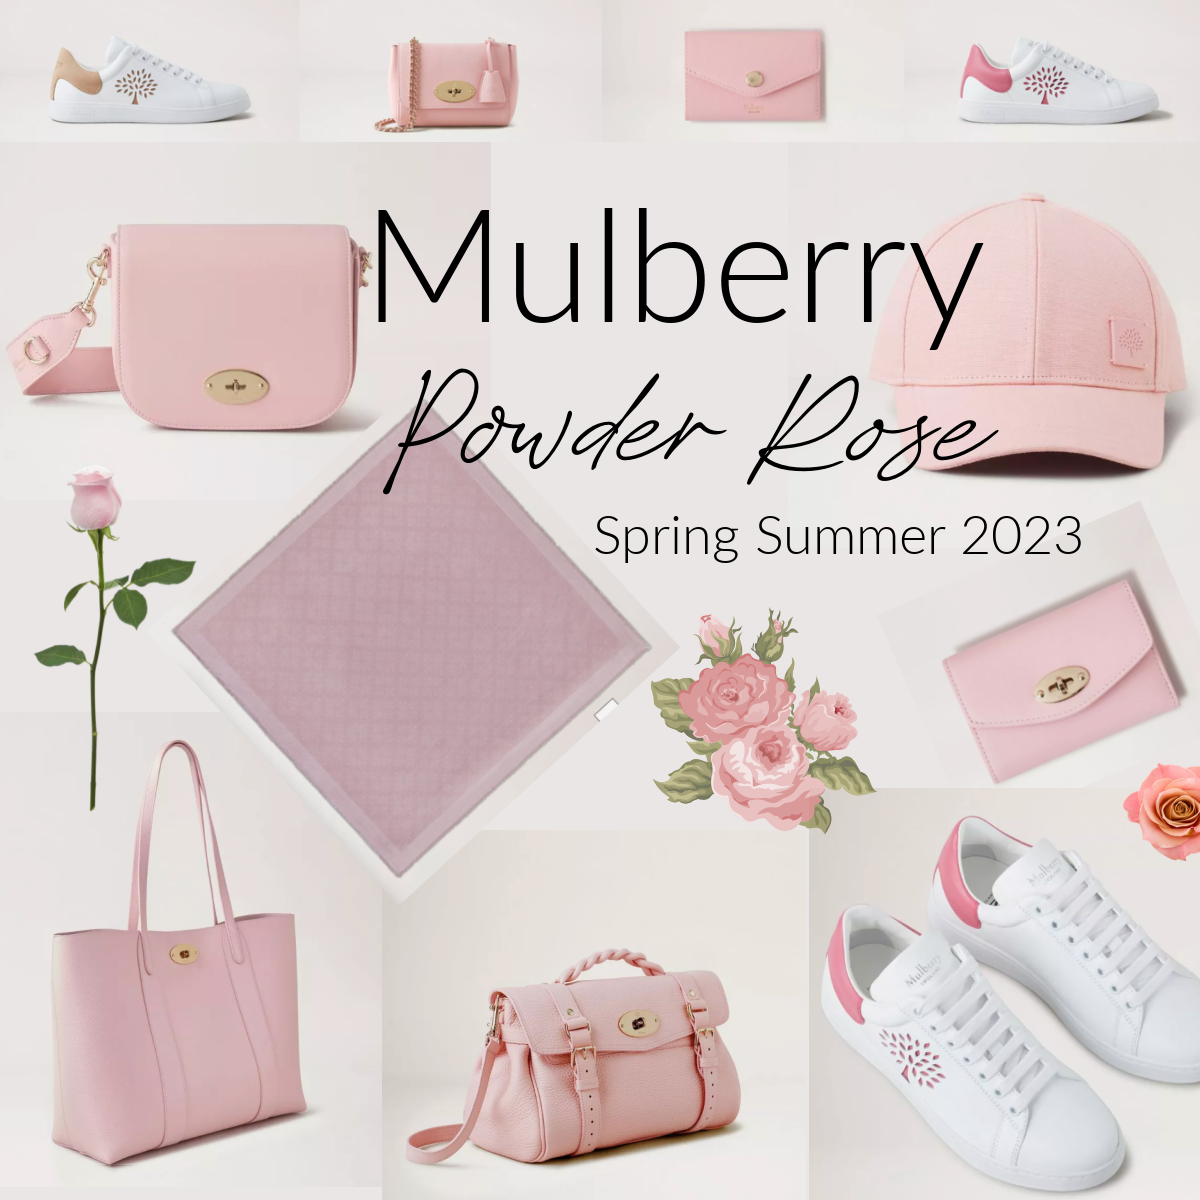 The new Mulberry Handbag shade for Spring Summer 2023 : Powder Rose!